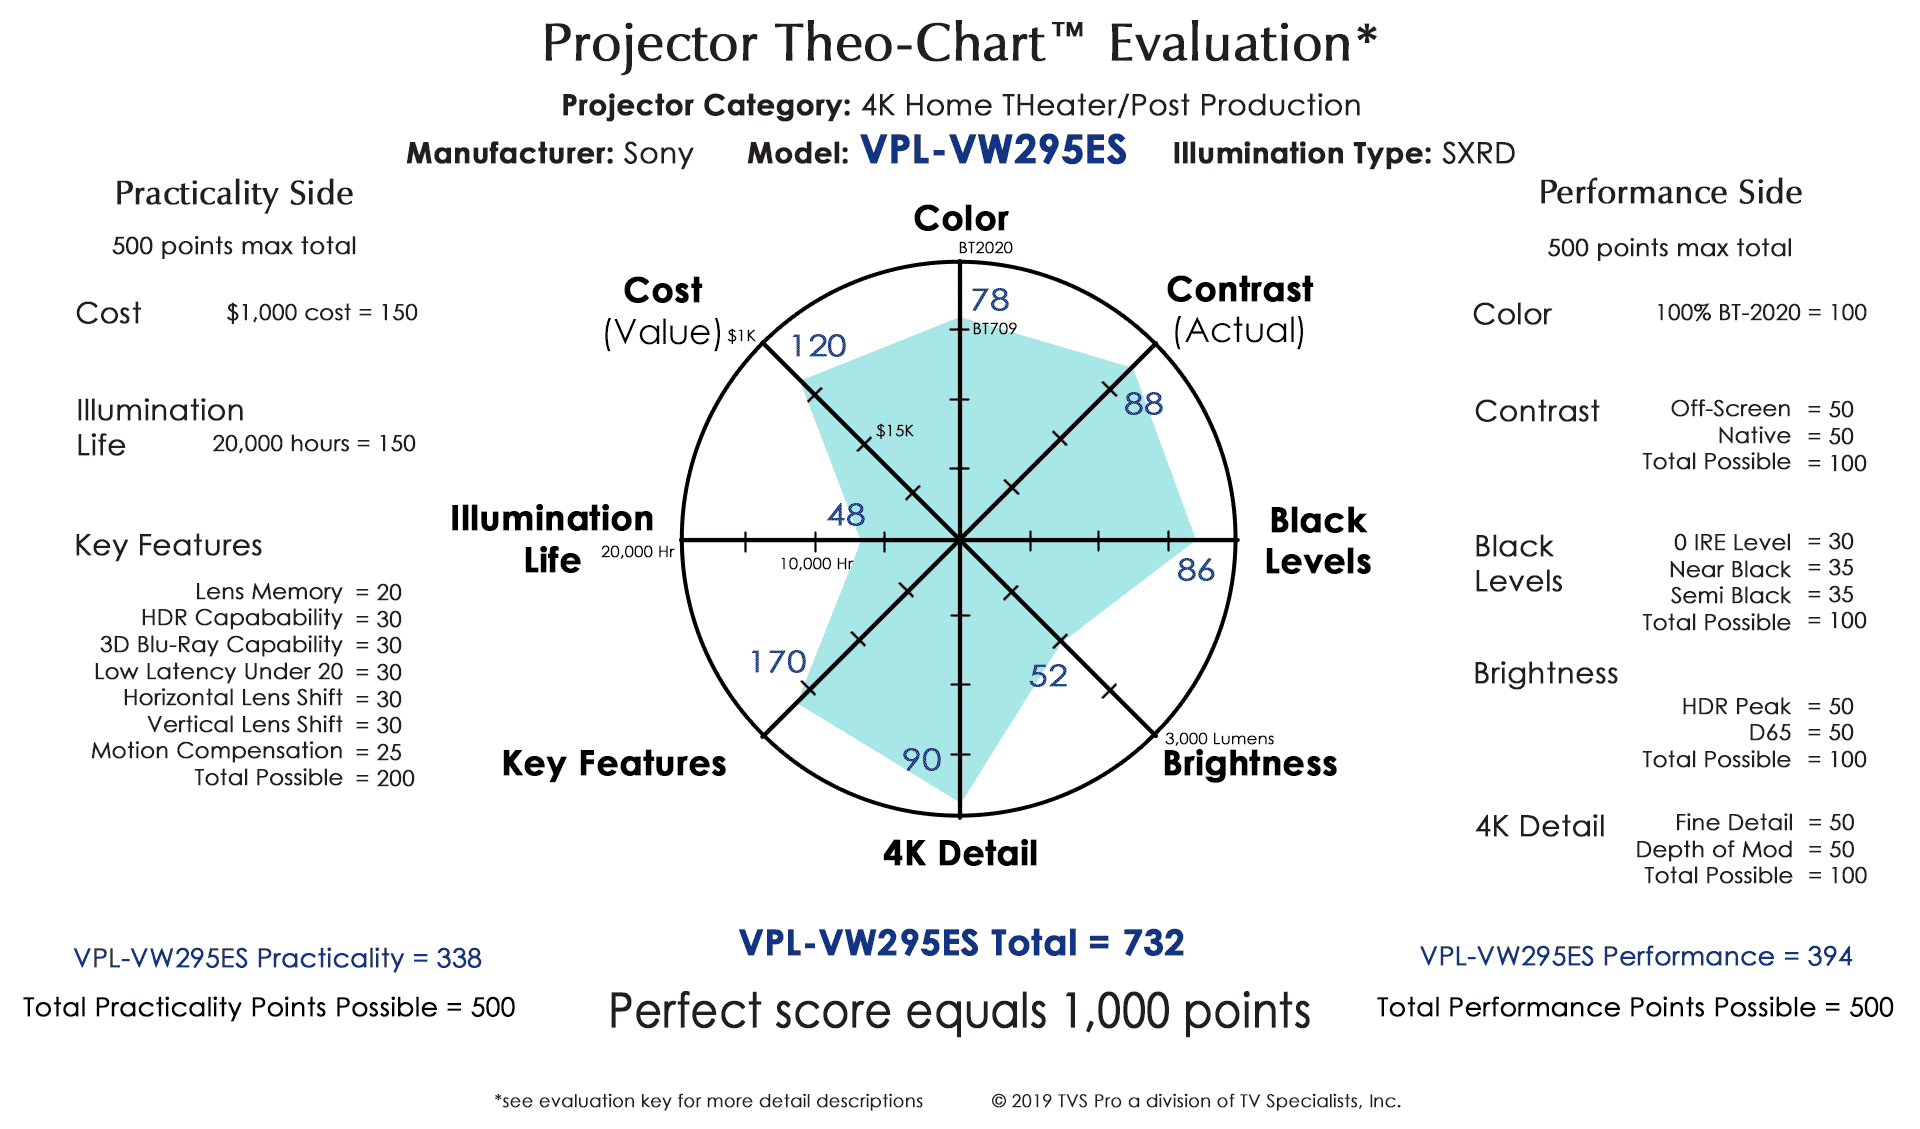 Video Projector Comparison Chart